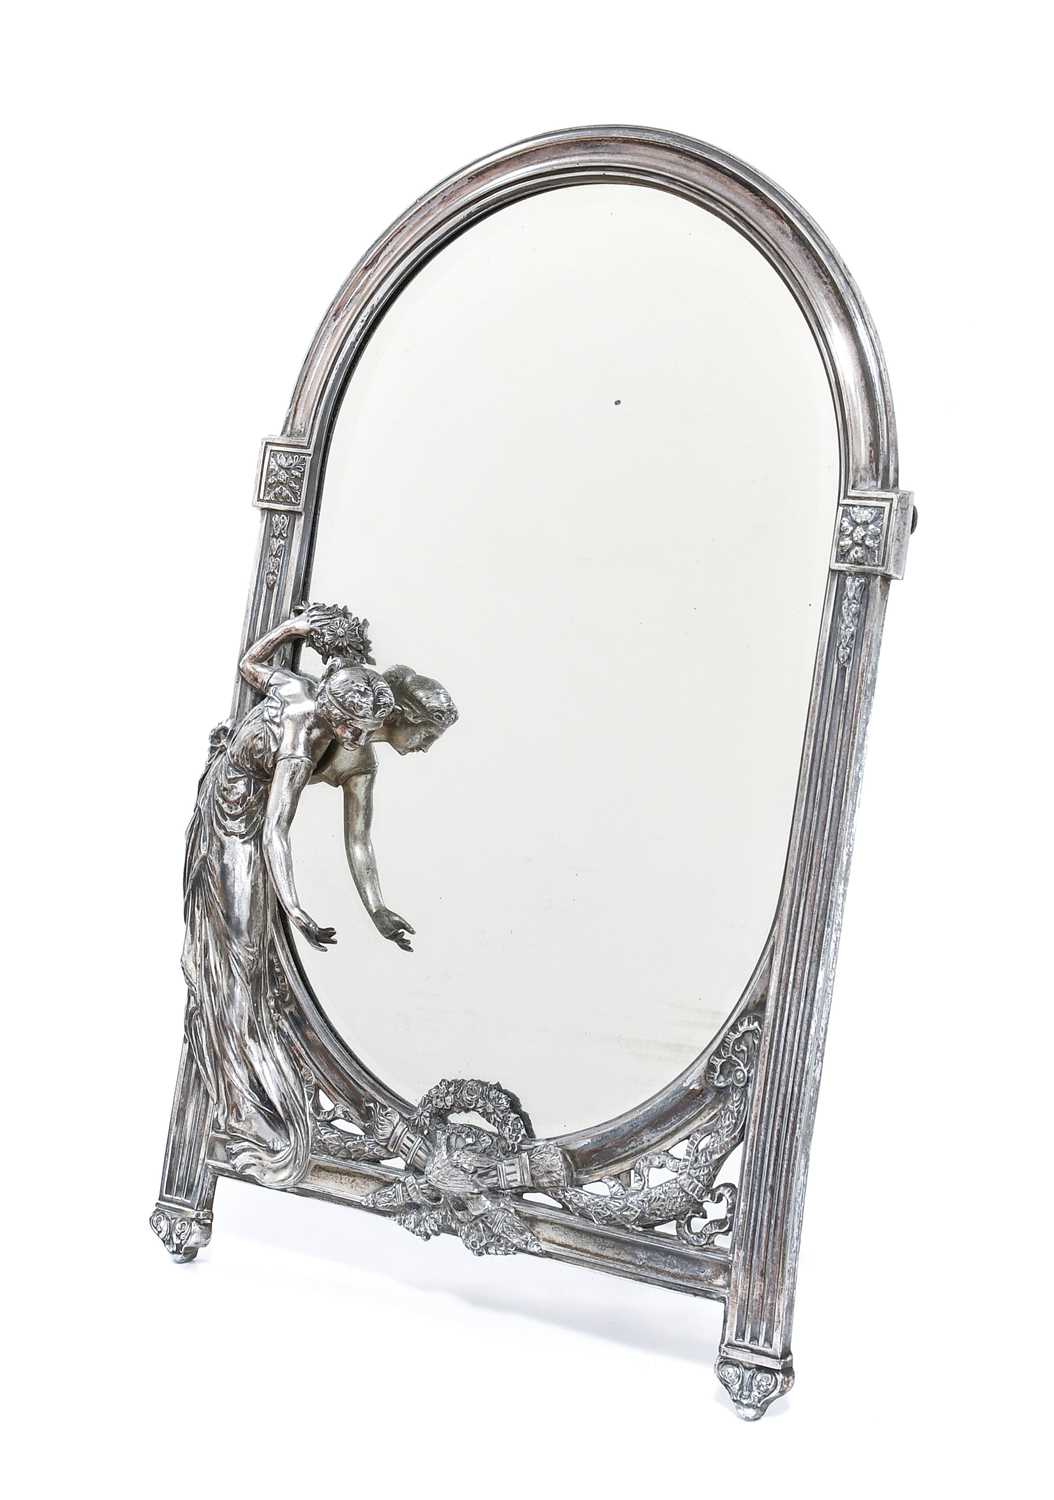 A Jugendstil WMF (Wurttembergische Metallwarenfabrik) Silver Plated Toilet Mirror, the bevelled